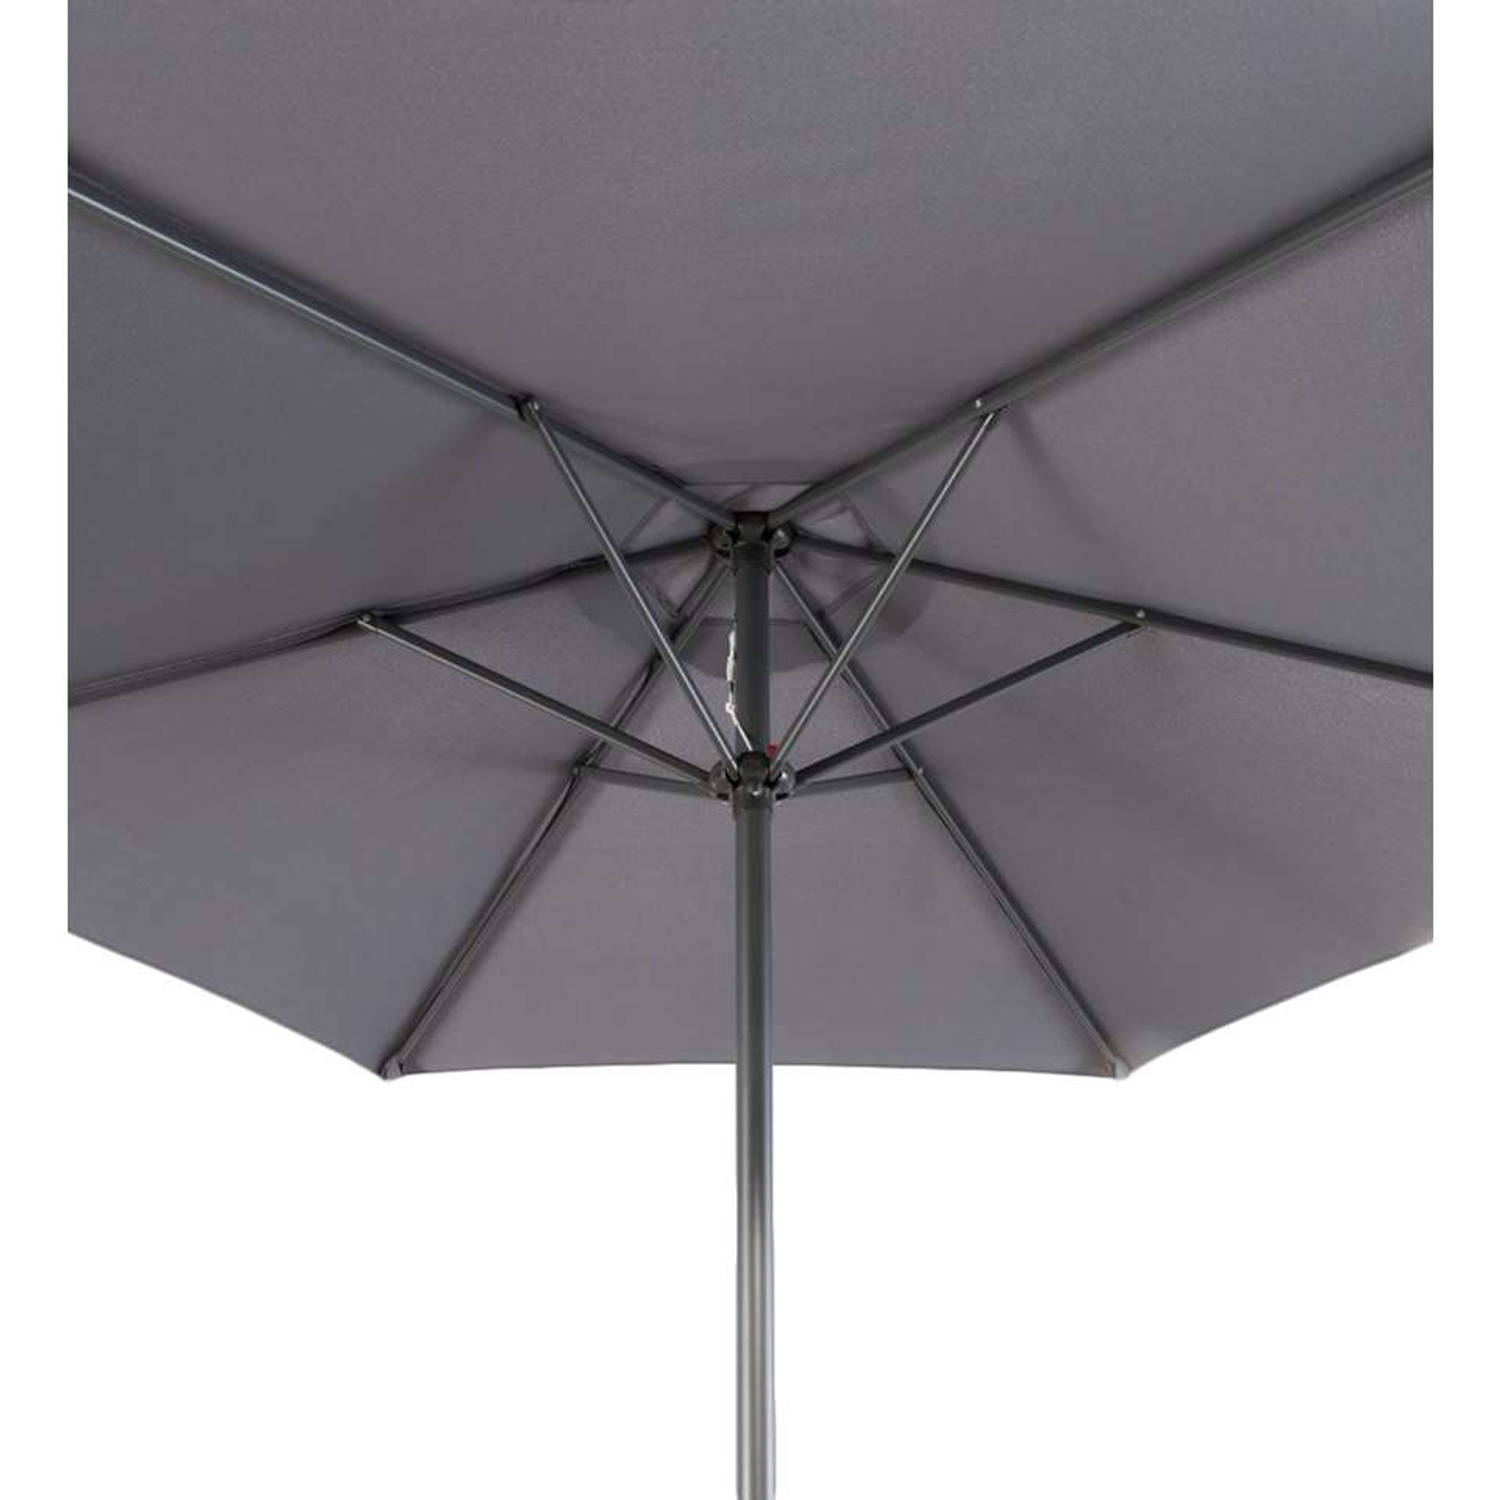 Sjah stap in Il Le Sud parasol Blanca - antraciet | Blokker